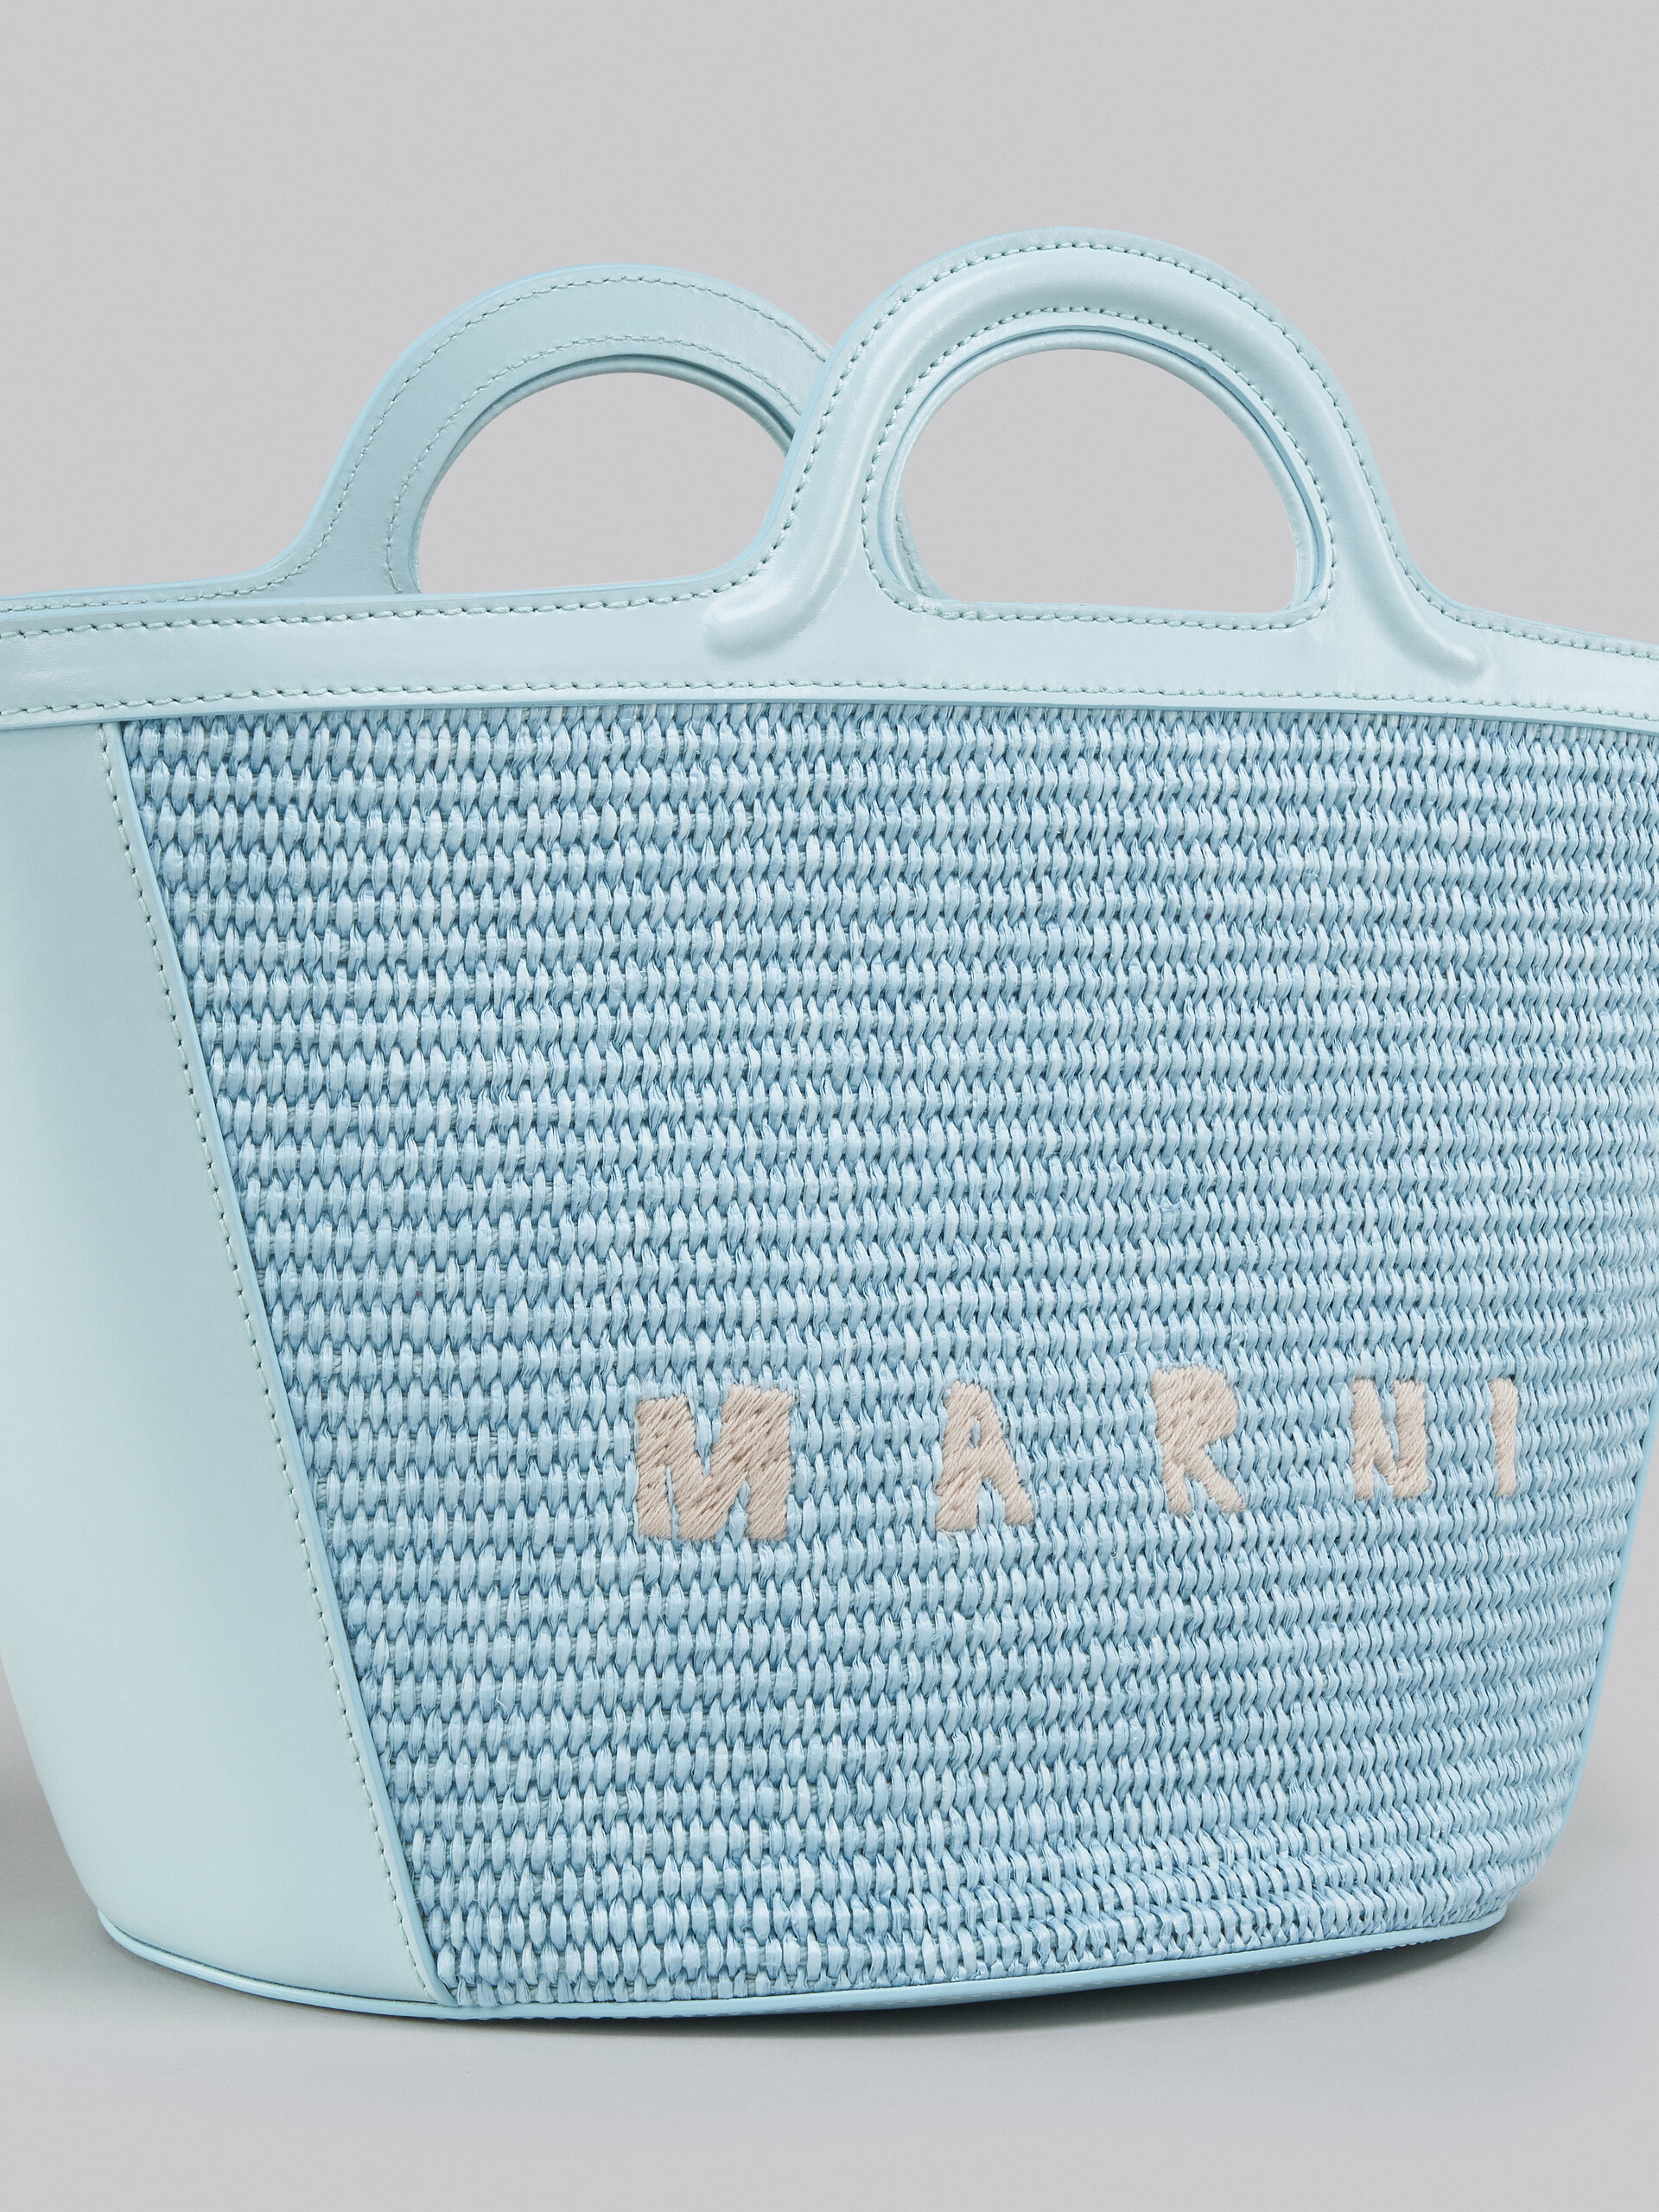 Tropicalia Small Bag in light blue leather and raffia-effect fabric - Handbags - Image 5